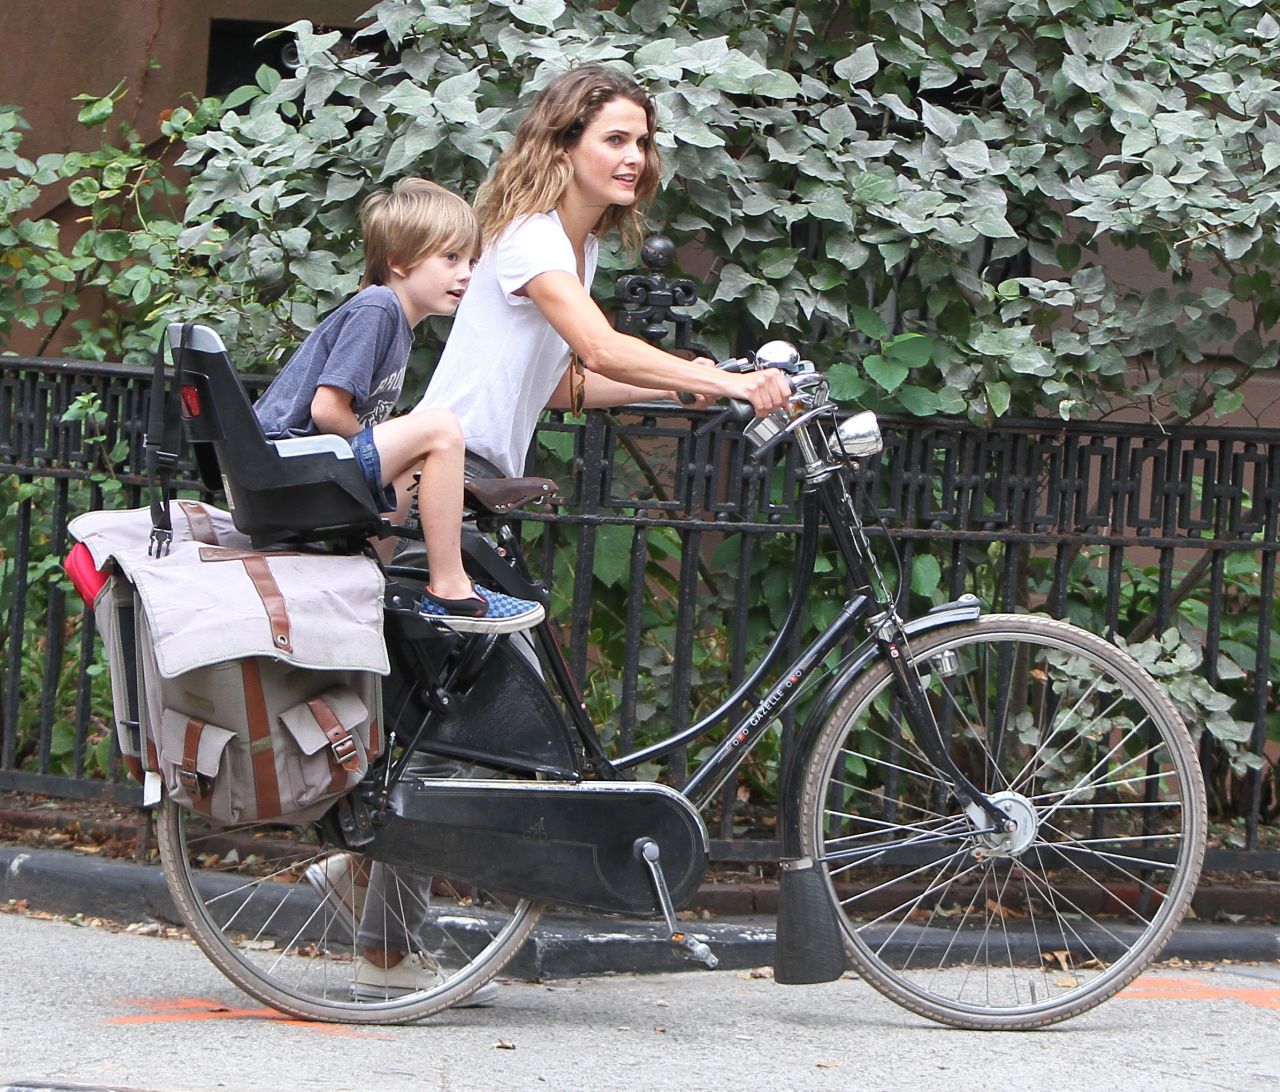 Keri Russell Street Style - Riding a Bike in Brooklyn, Sept. 2014 ...